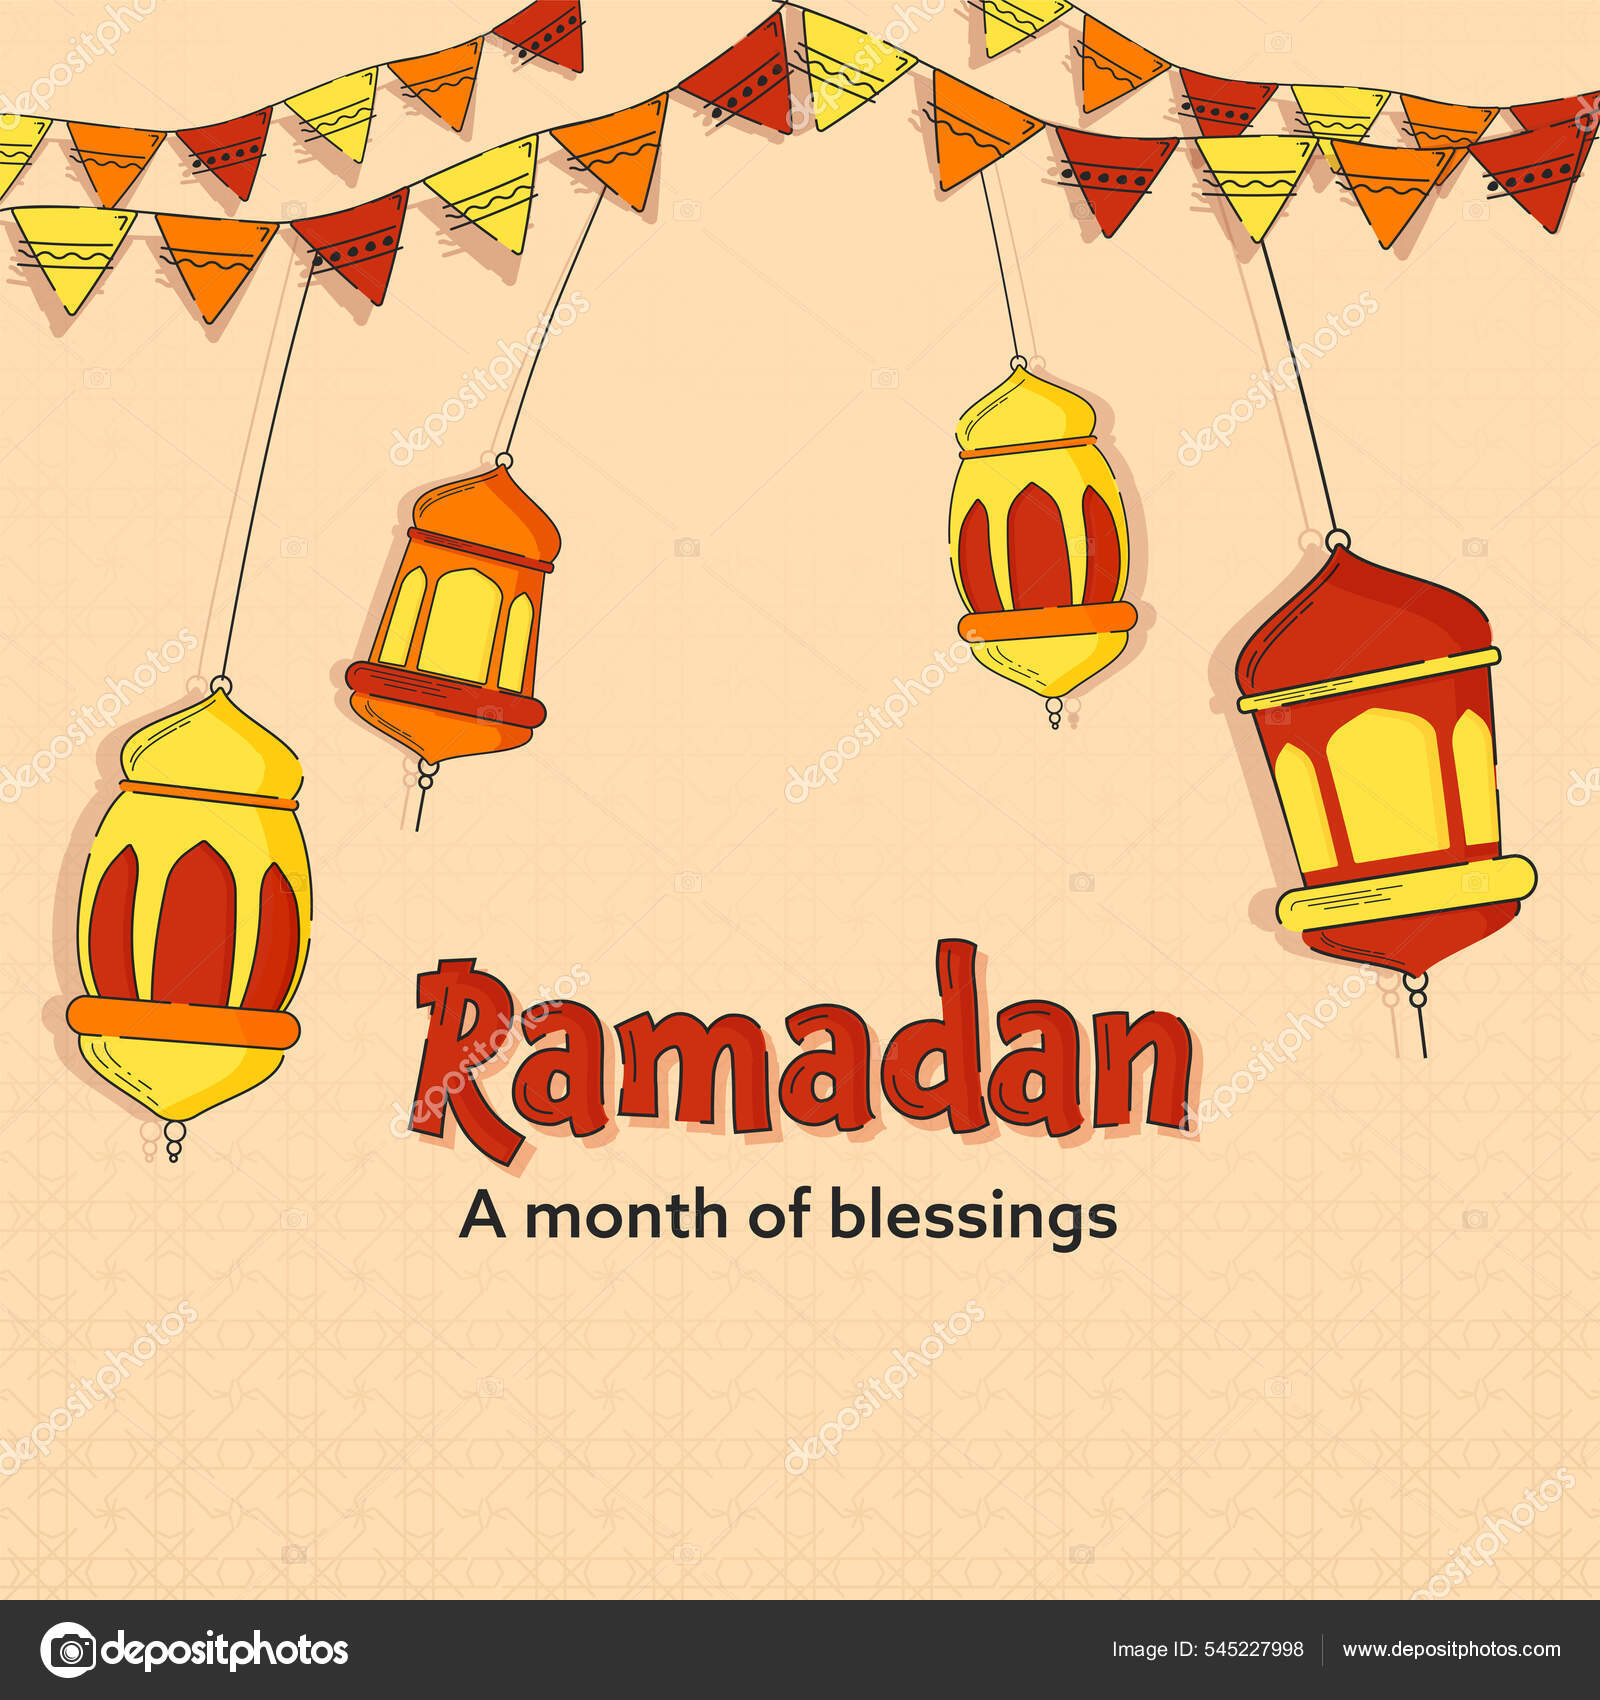 Welcome Ramadan Banner - Ramadan Decoration - Ramadany